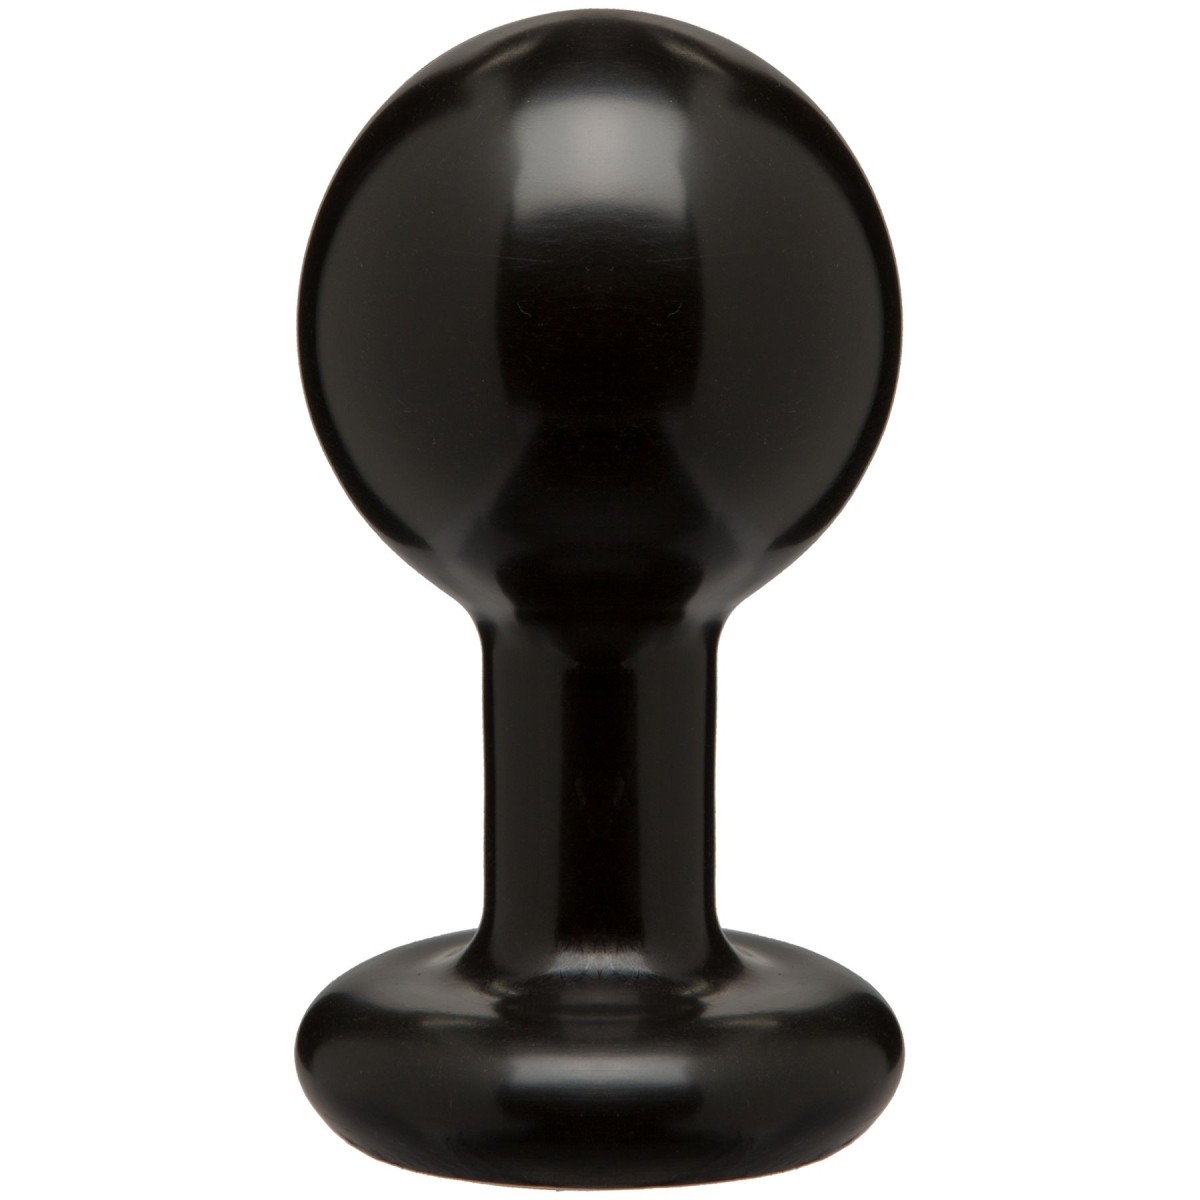 Doc Johnson Classic Round Butt Plugs Medium Black, černý anální kolík 10,9 x 5,5 cm